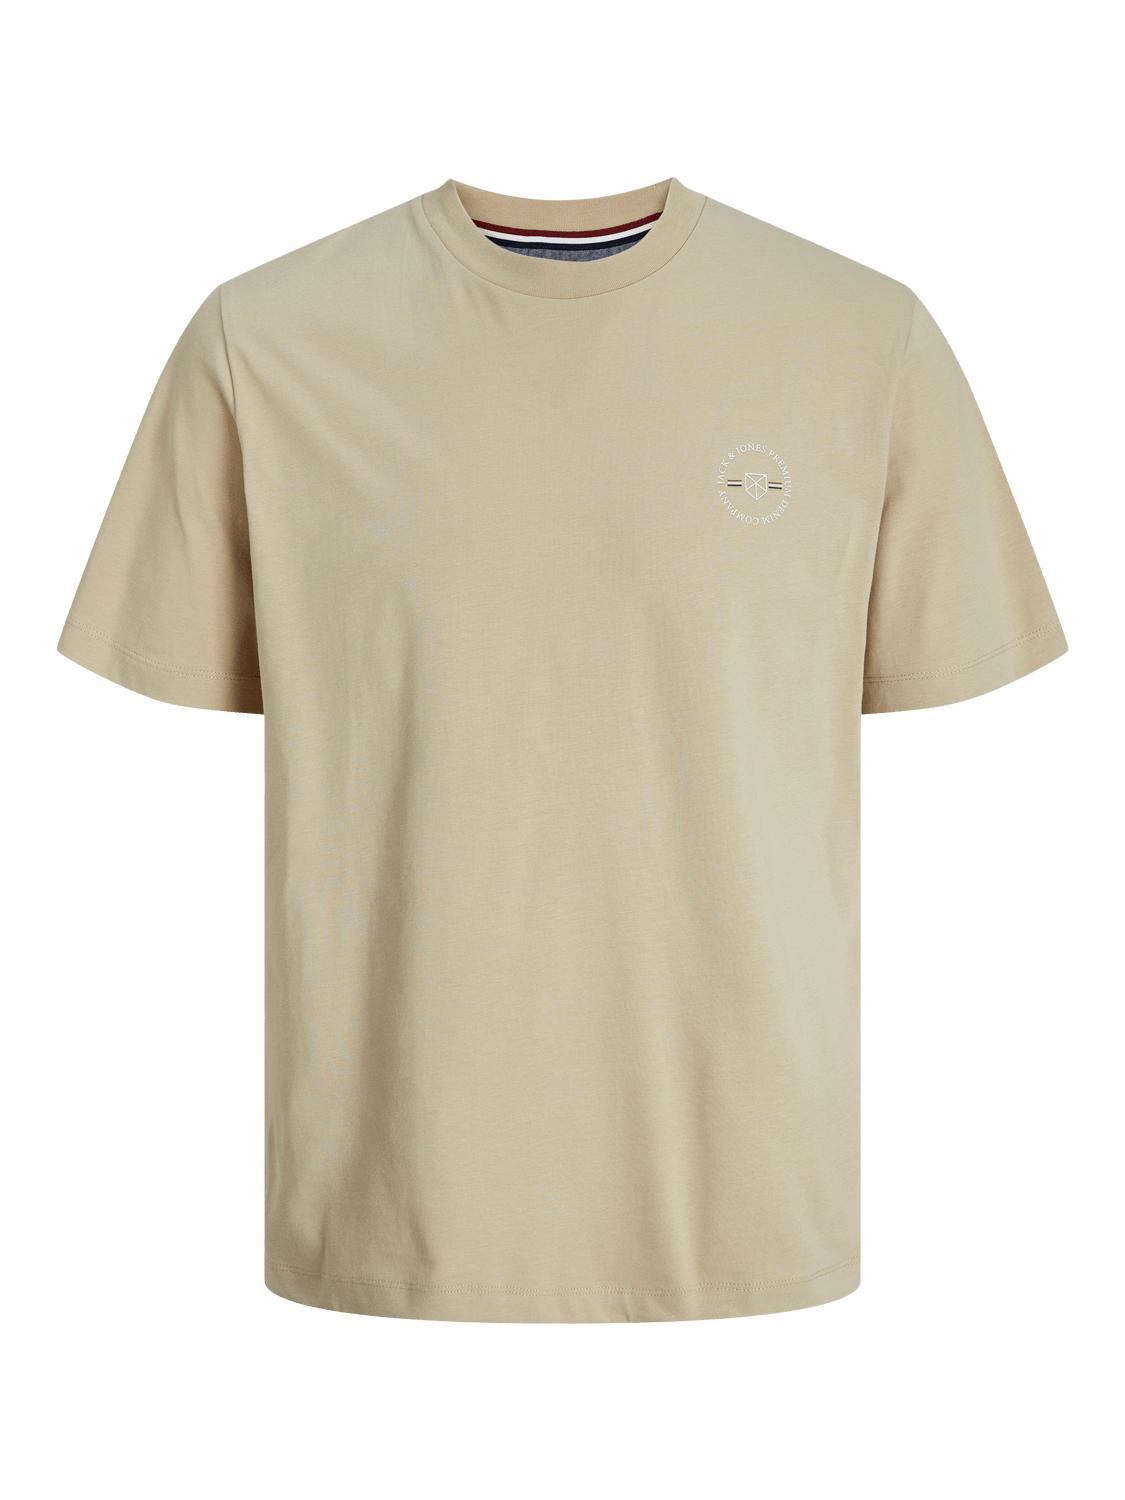 Camiseta manga corta beige con logo -JPRBLUSHIELD